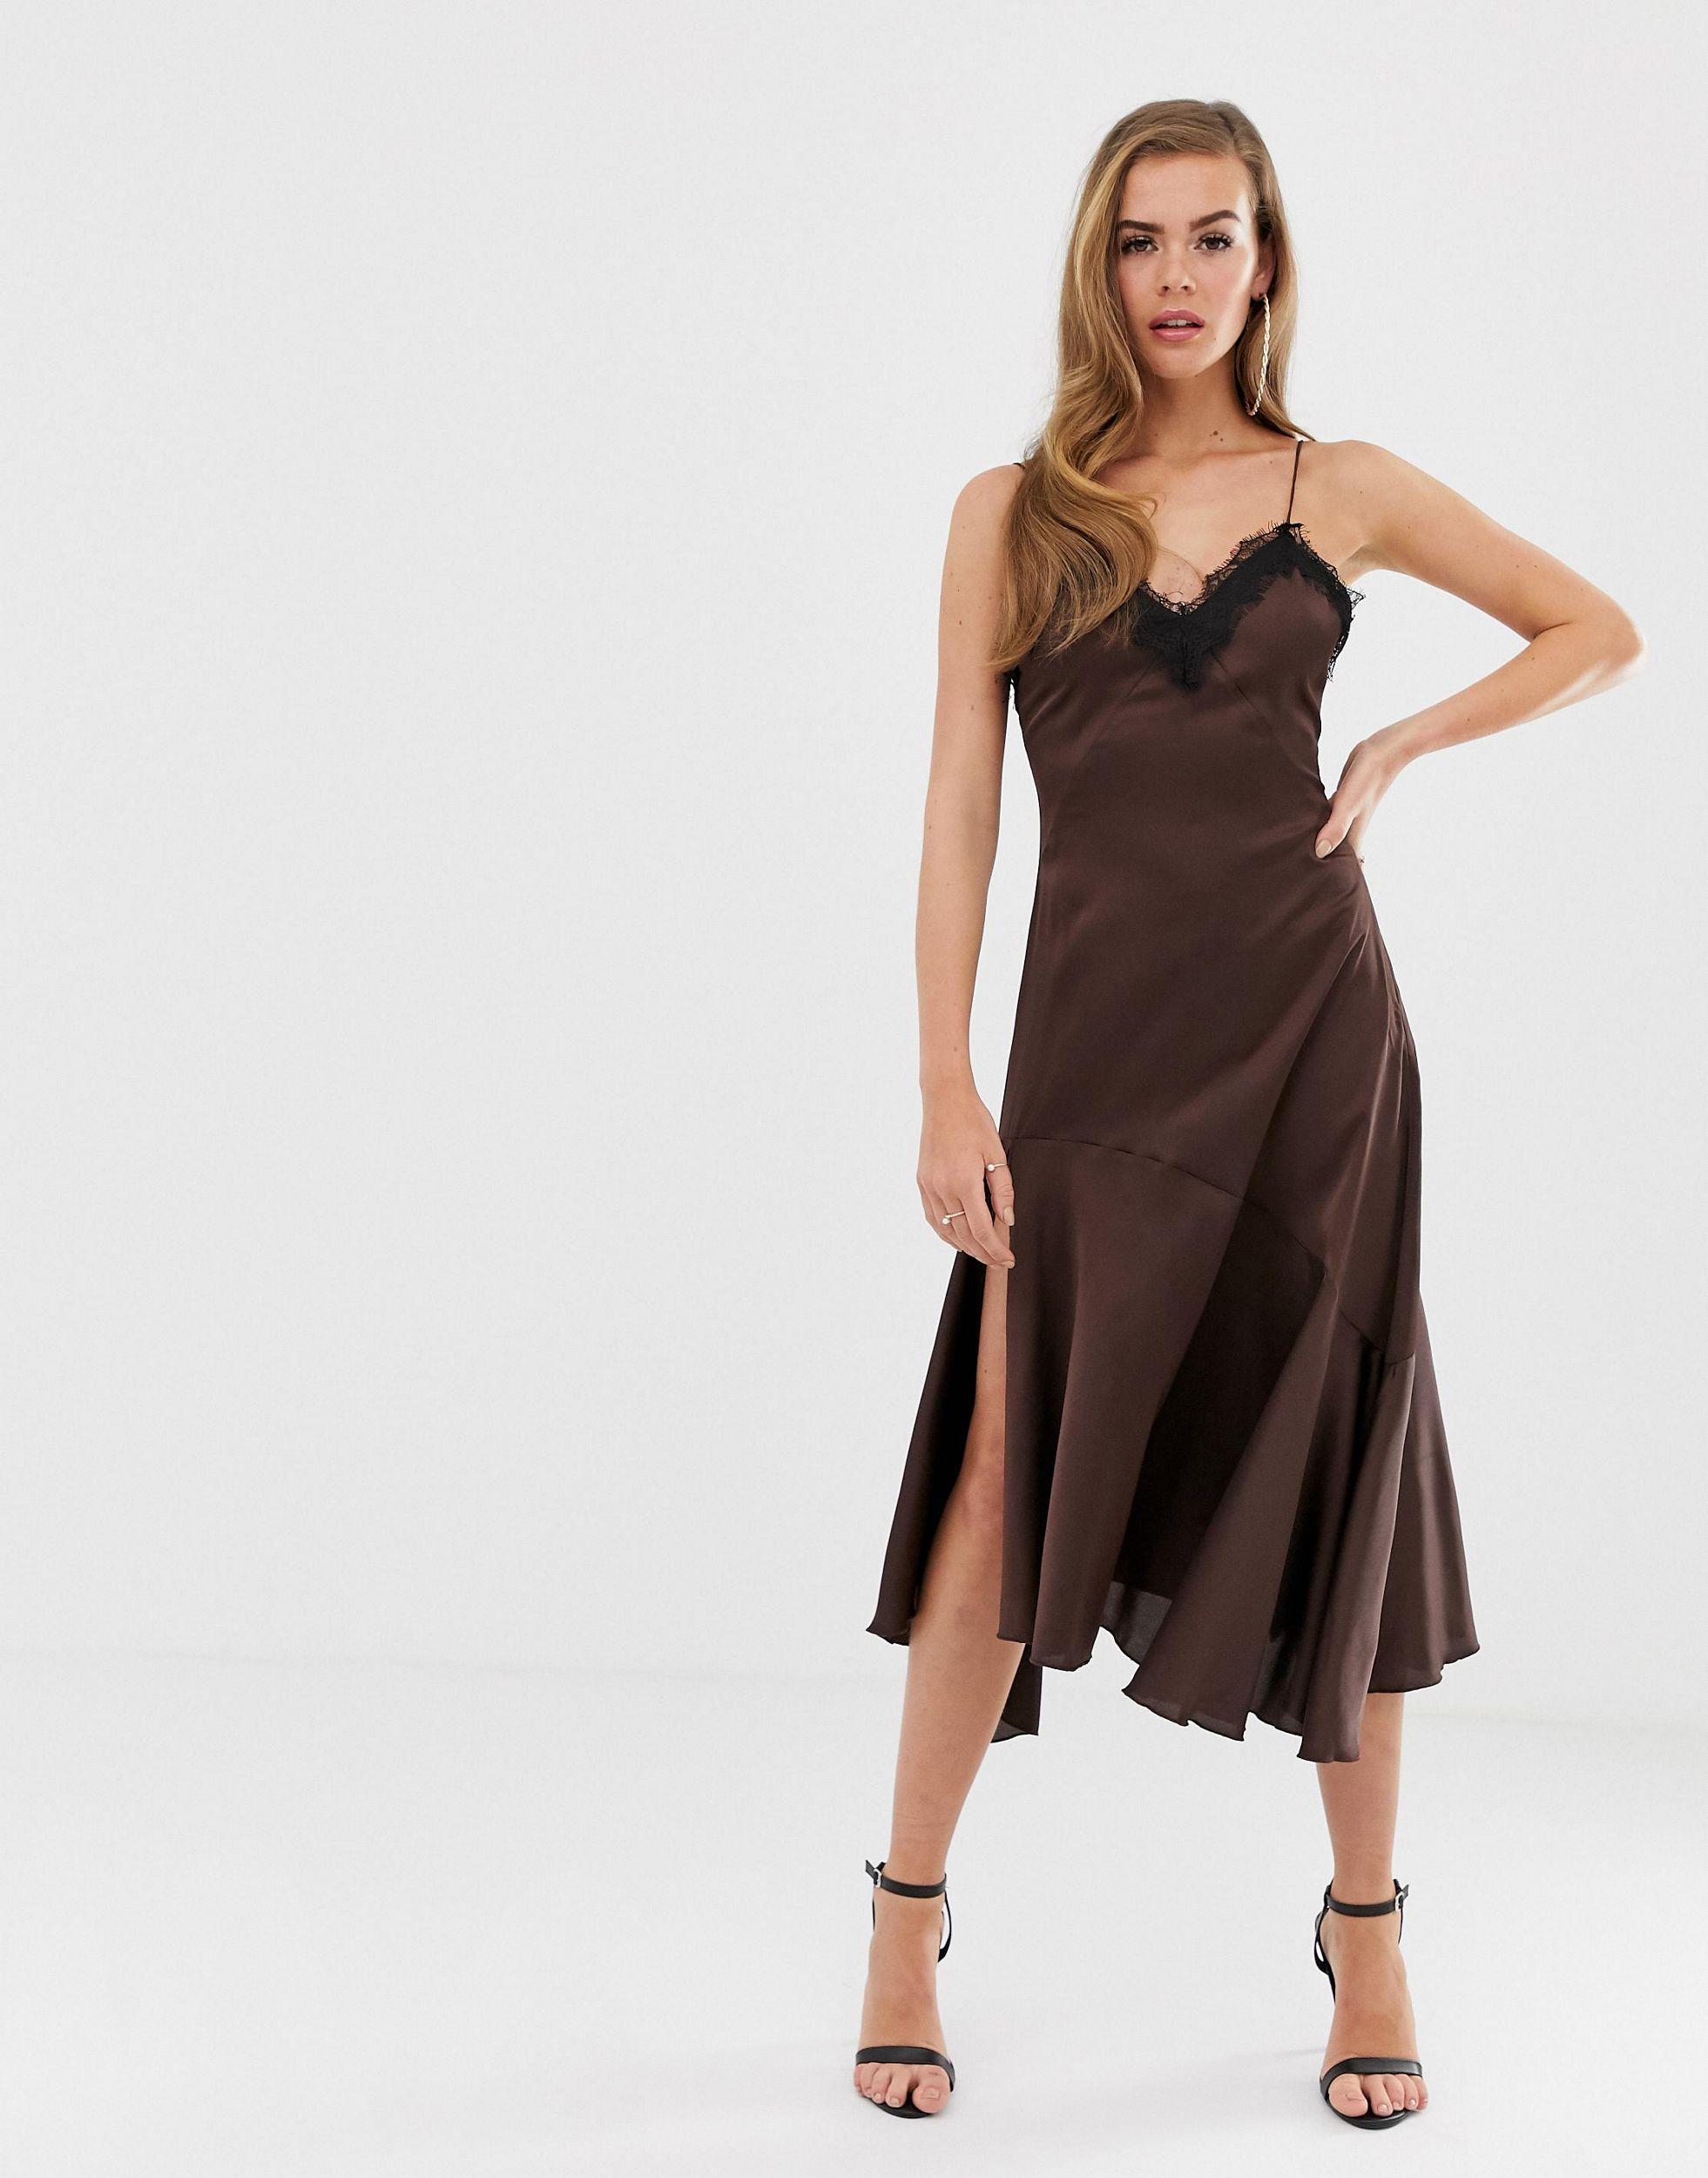 Boohoo Lace Trim Satin Slip Dress in Brown - Lyst